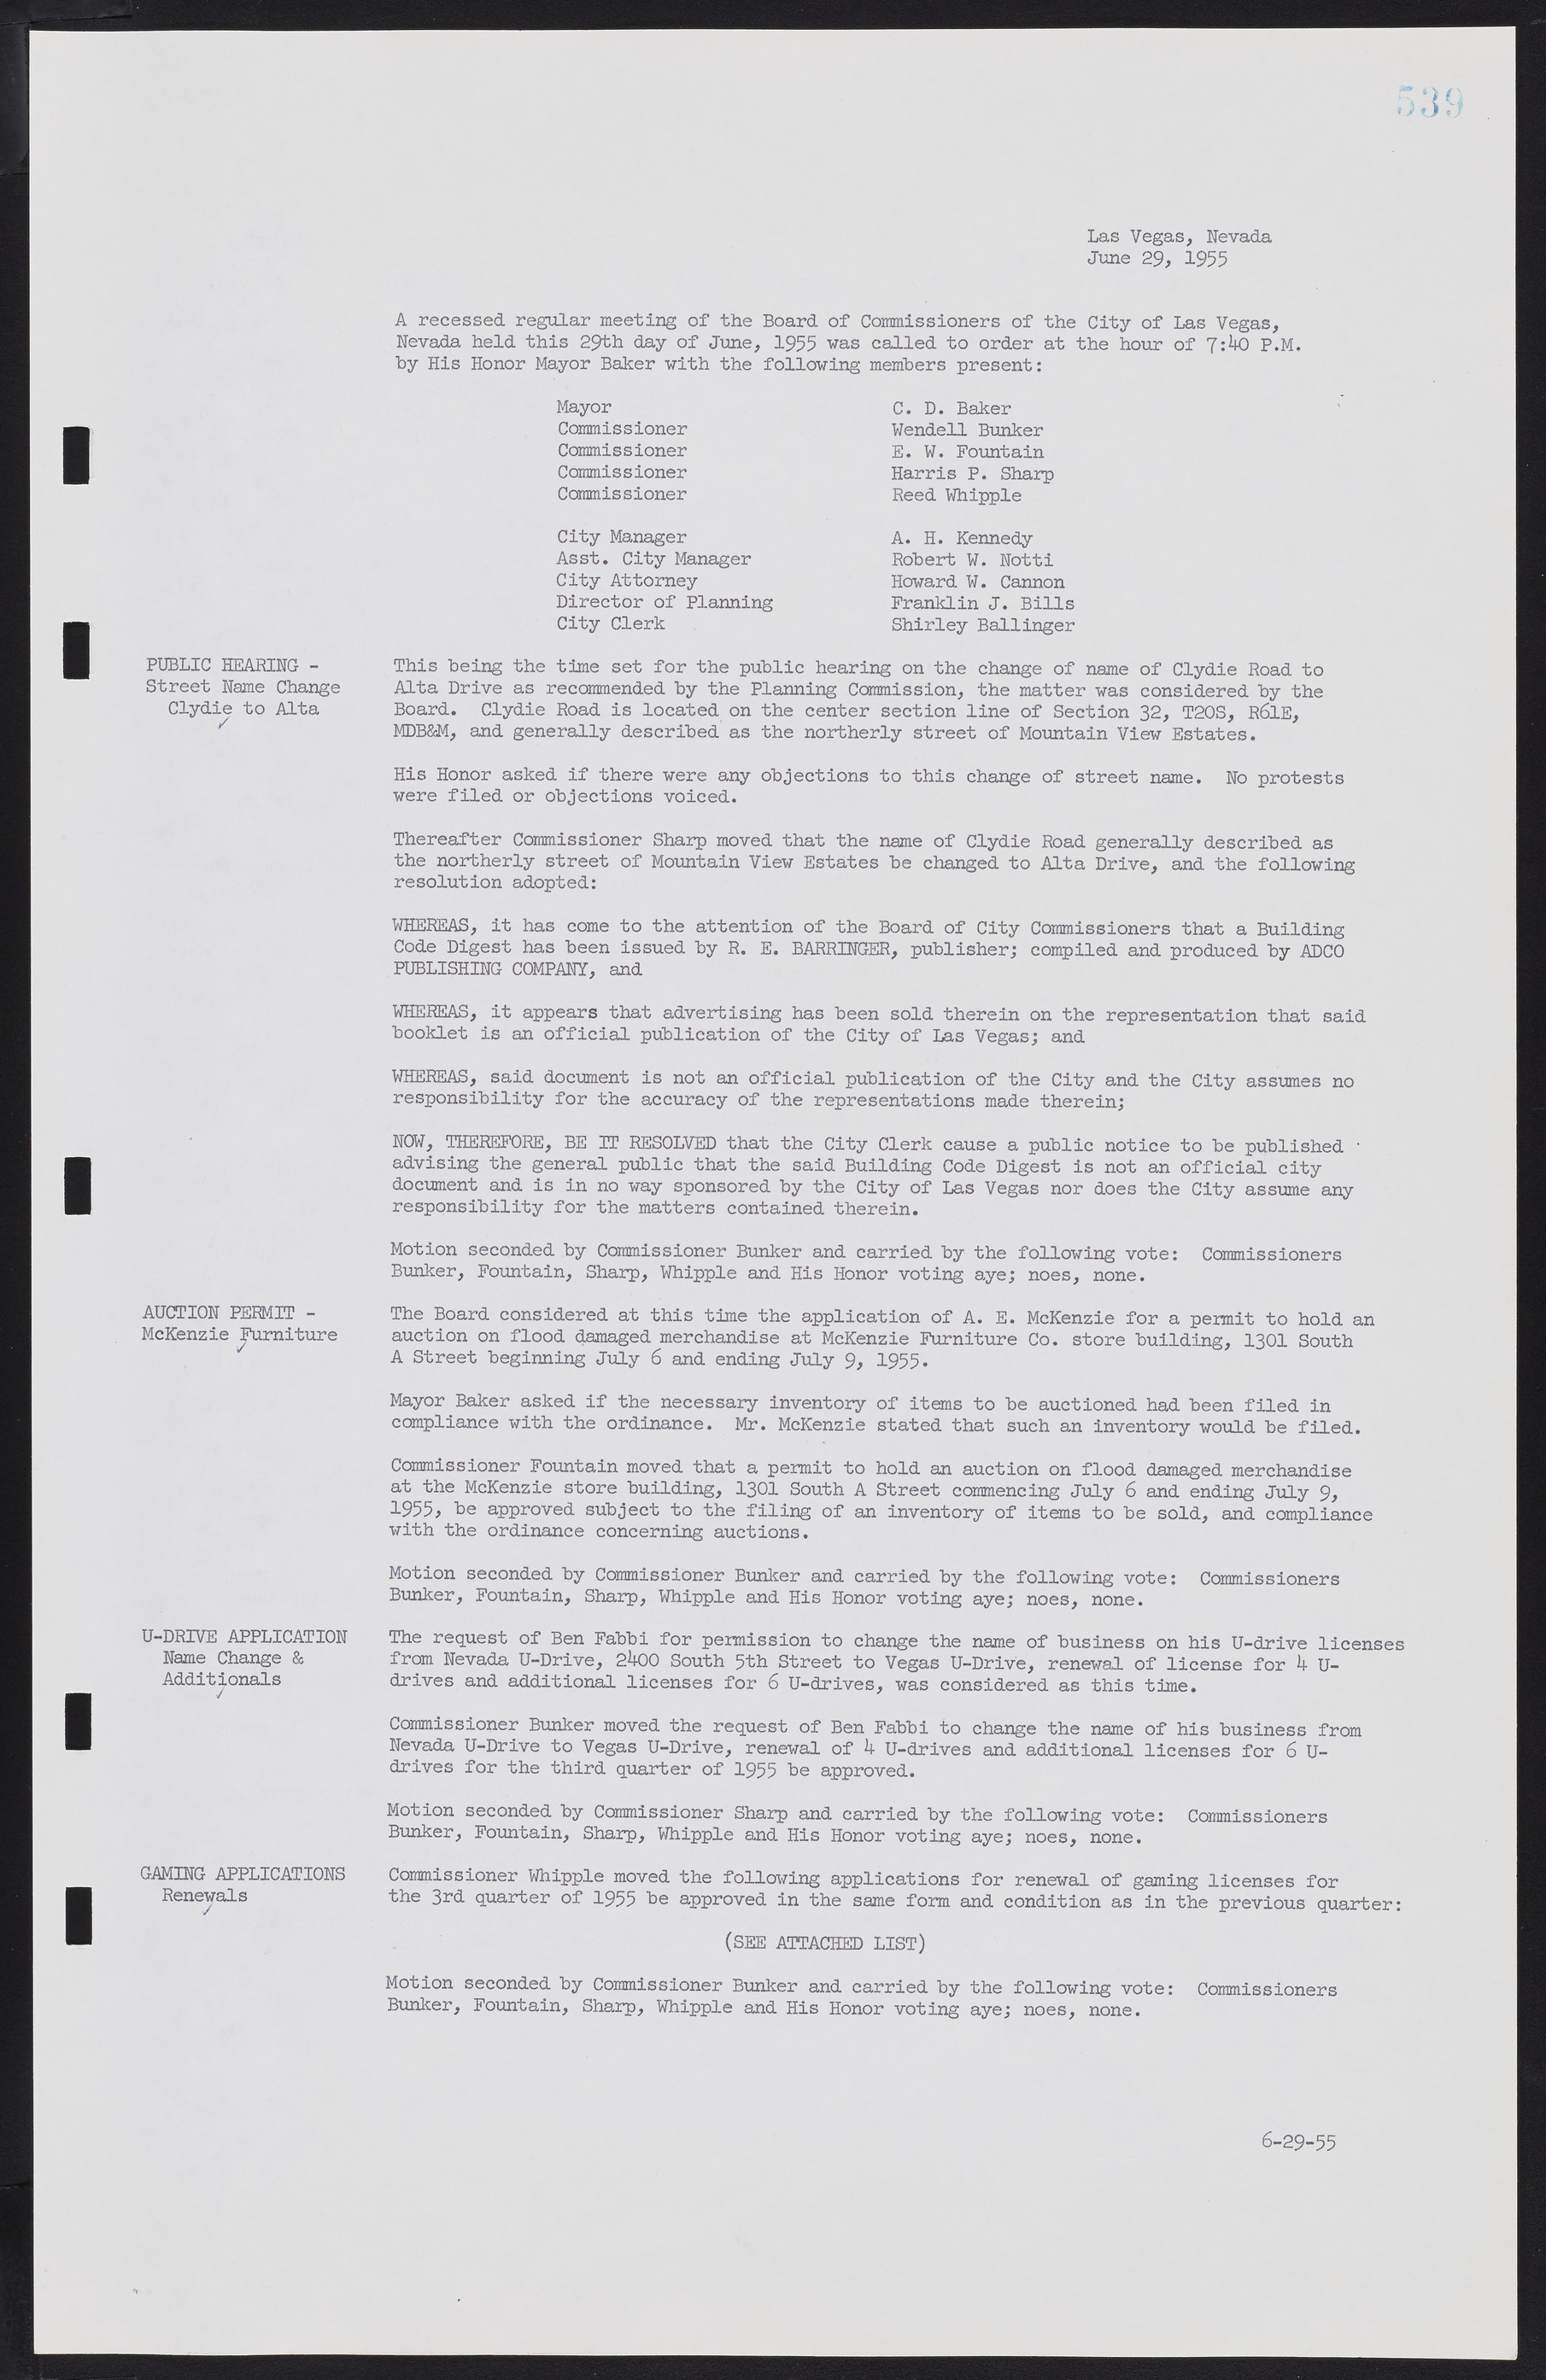 Las Vegas City Commission Minutes, February 17, 1954 to September 21, 1955, lvc000009-545